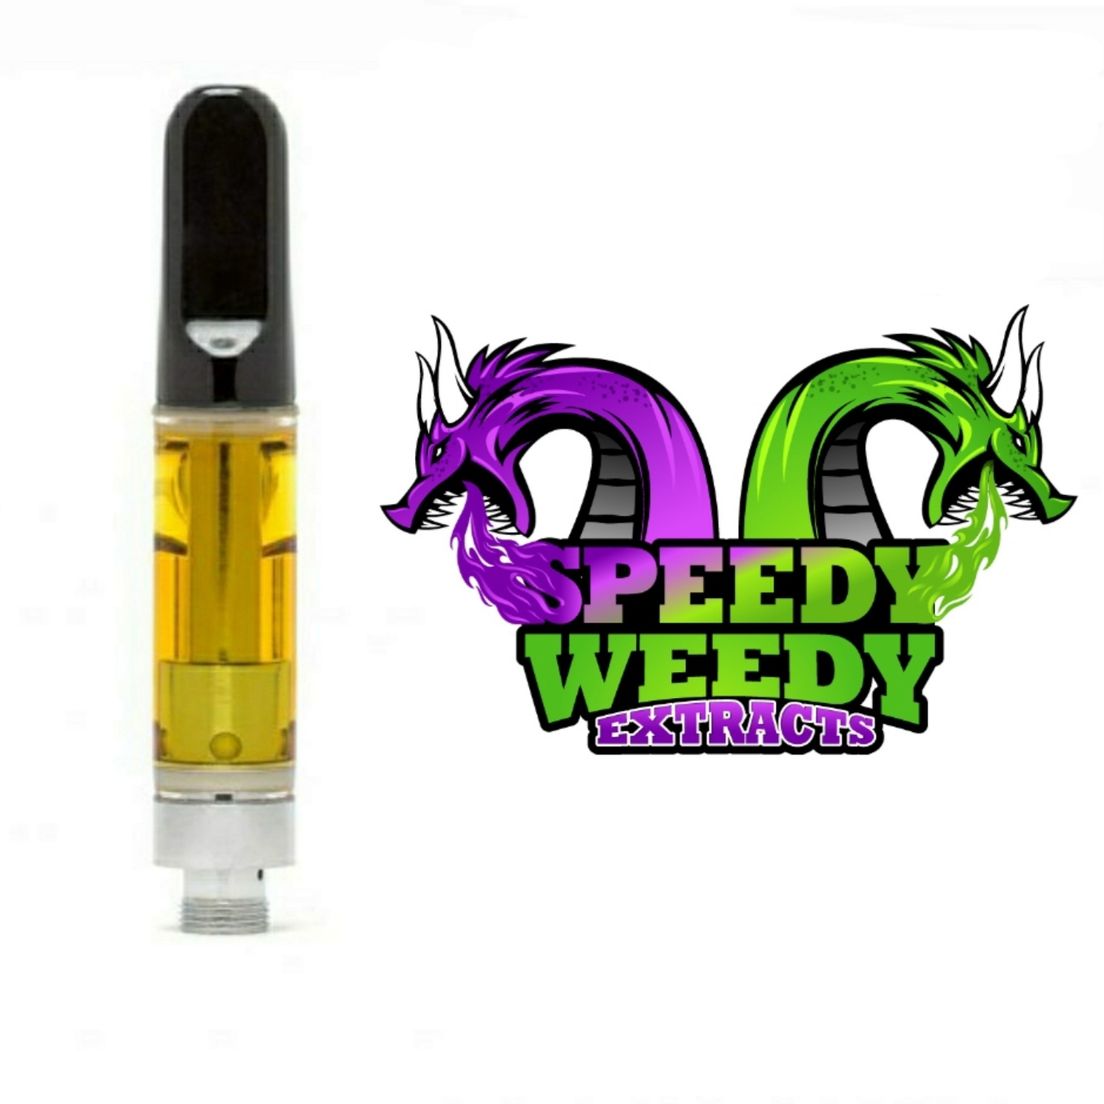 1. Speedy Weedy 1g THC Vape Cartridge - Grand Daddy Purple (I) 3/$60